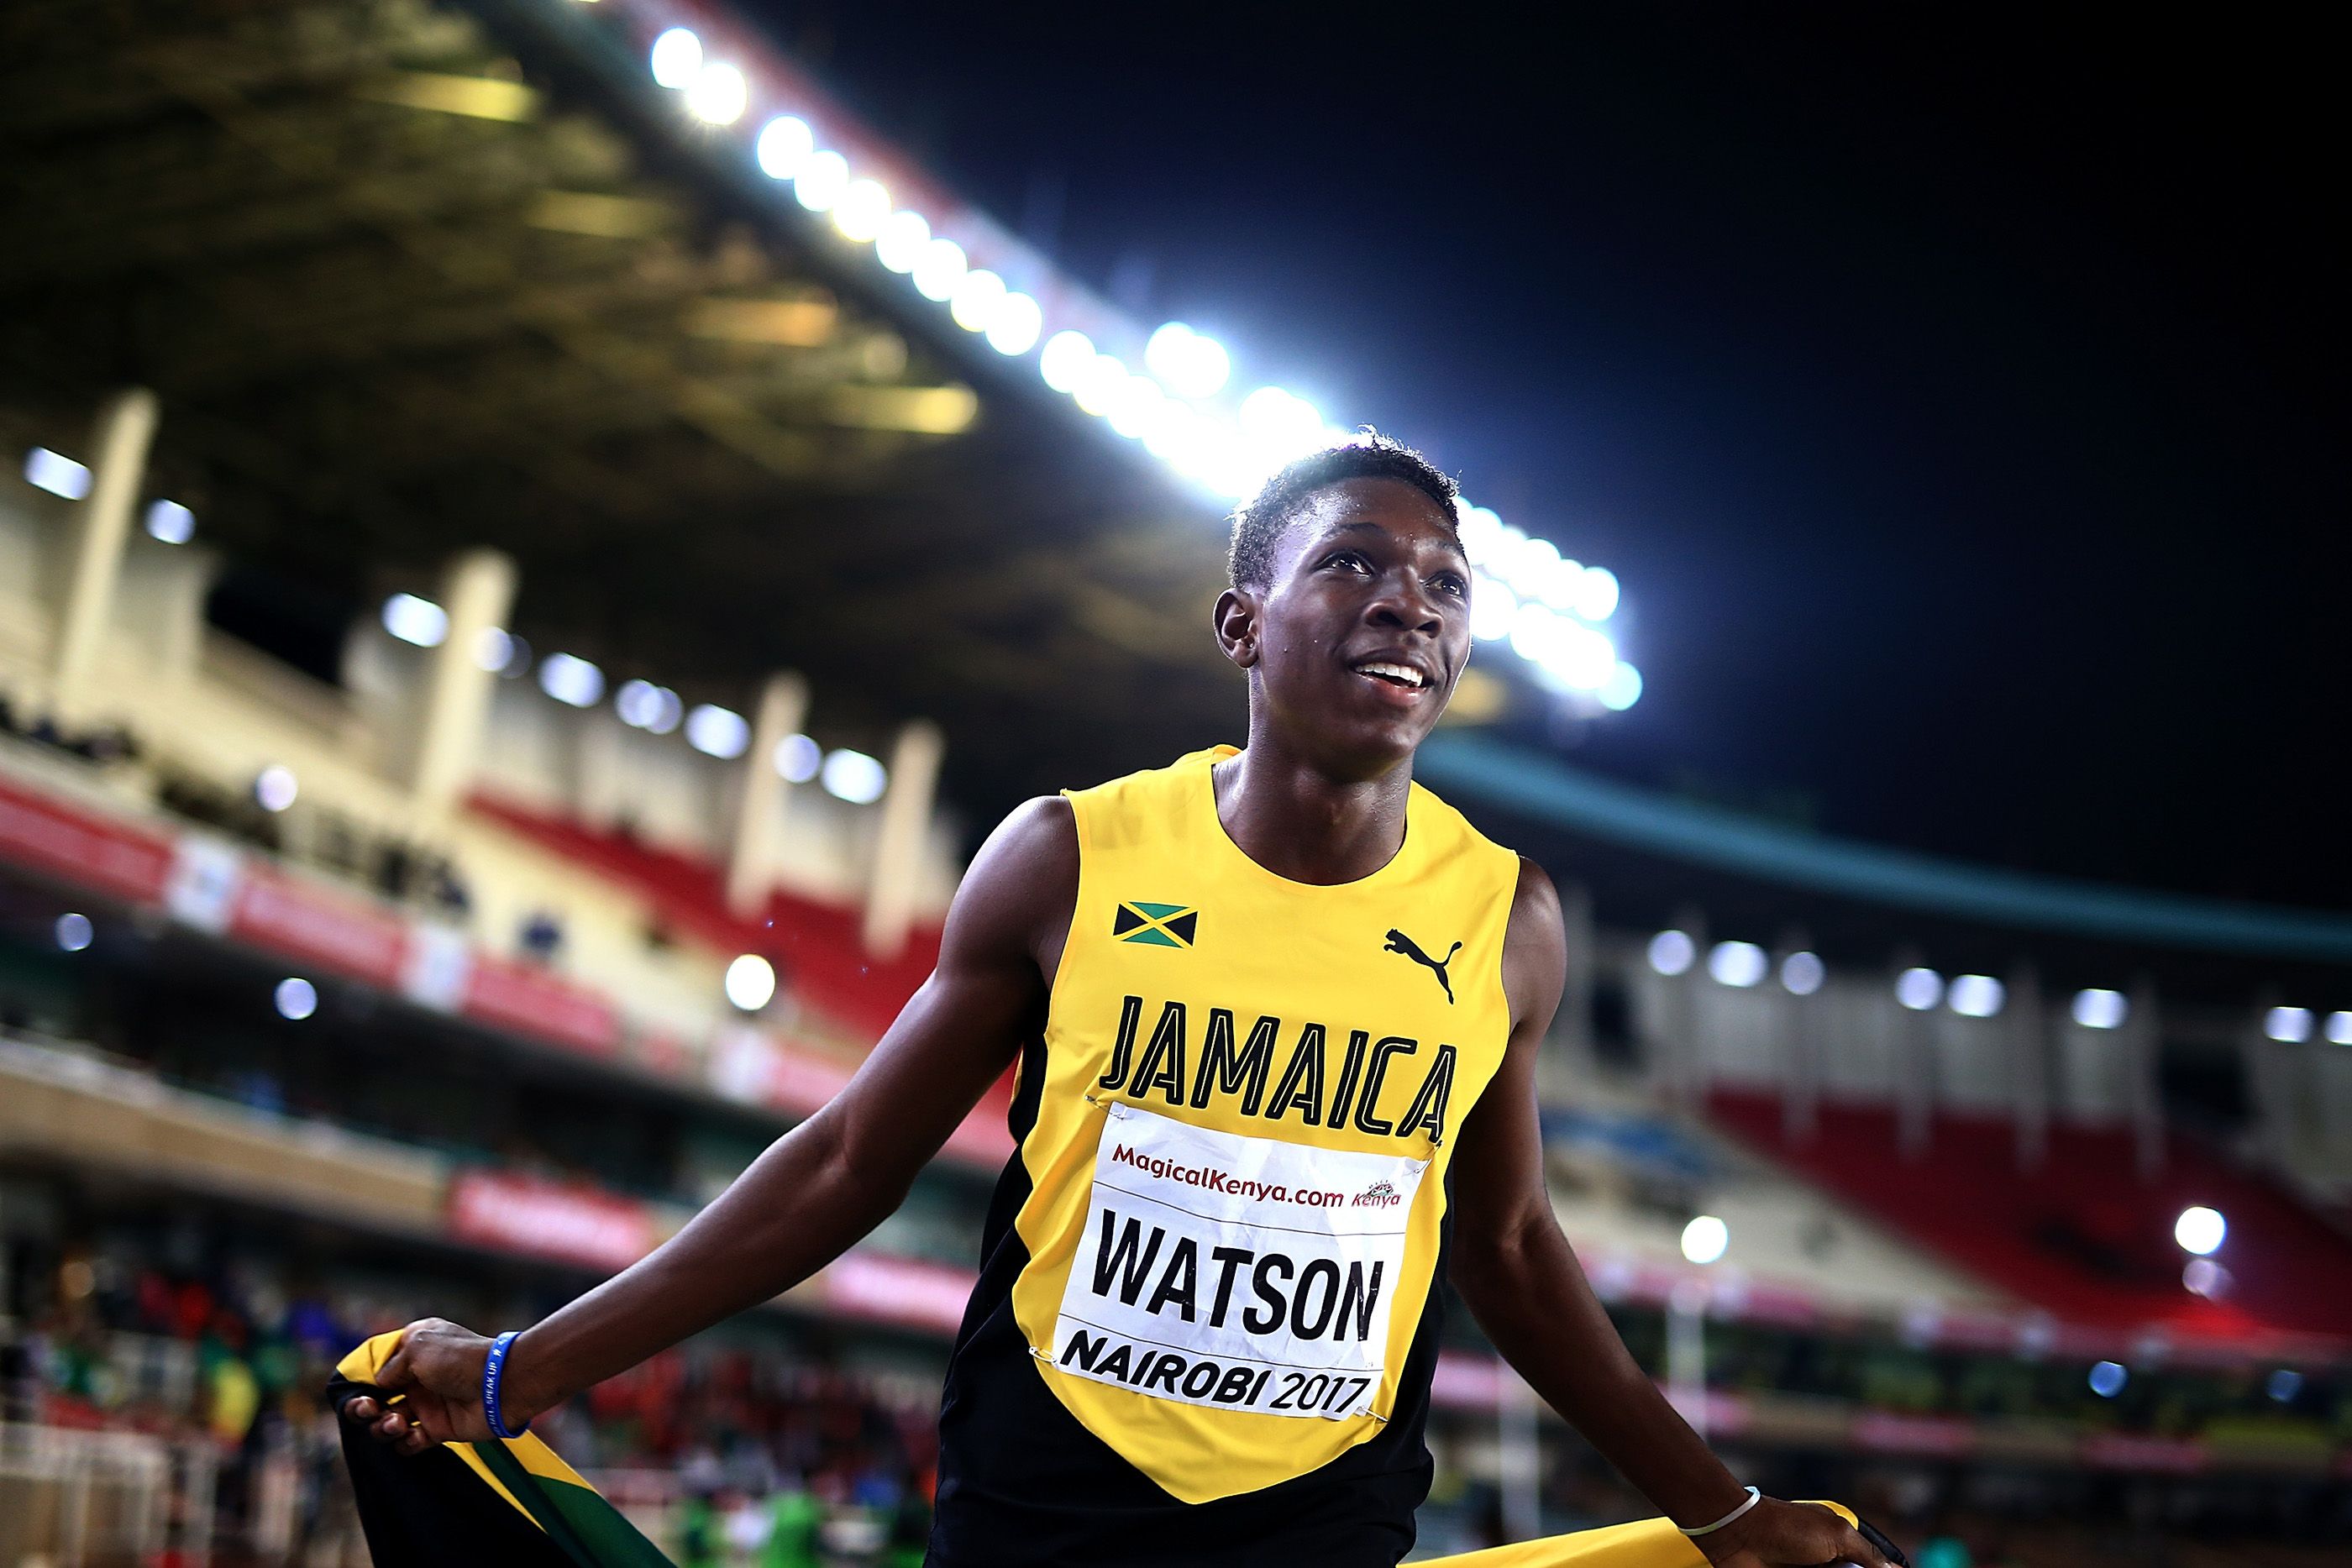 Antonio Watson at the 2017 World U18 Championships in Nairobi